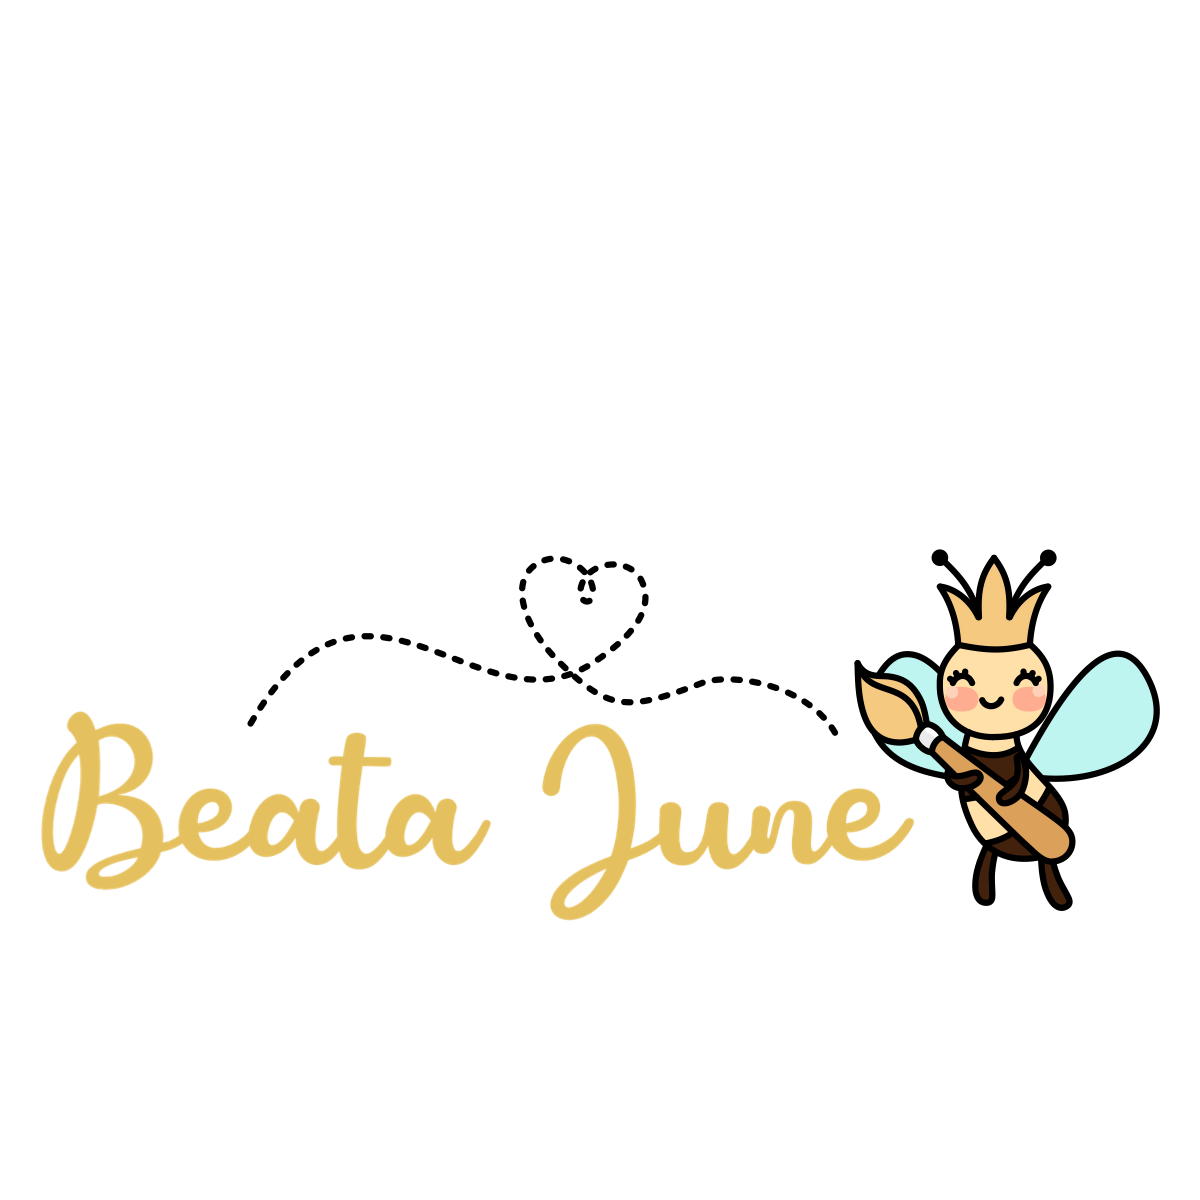 Beata June